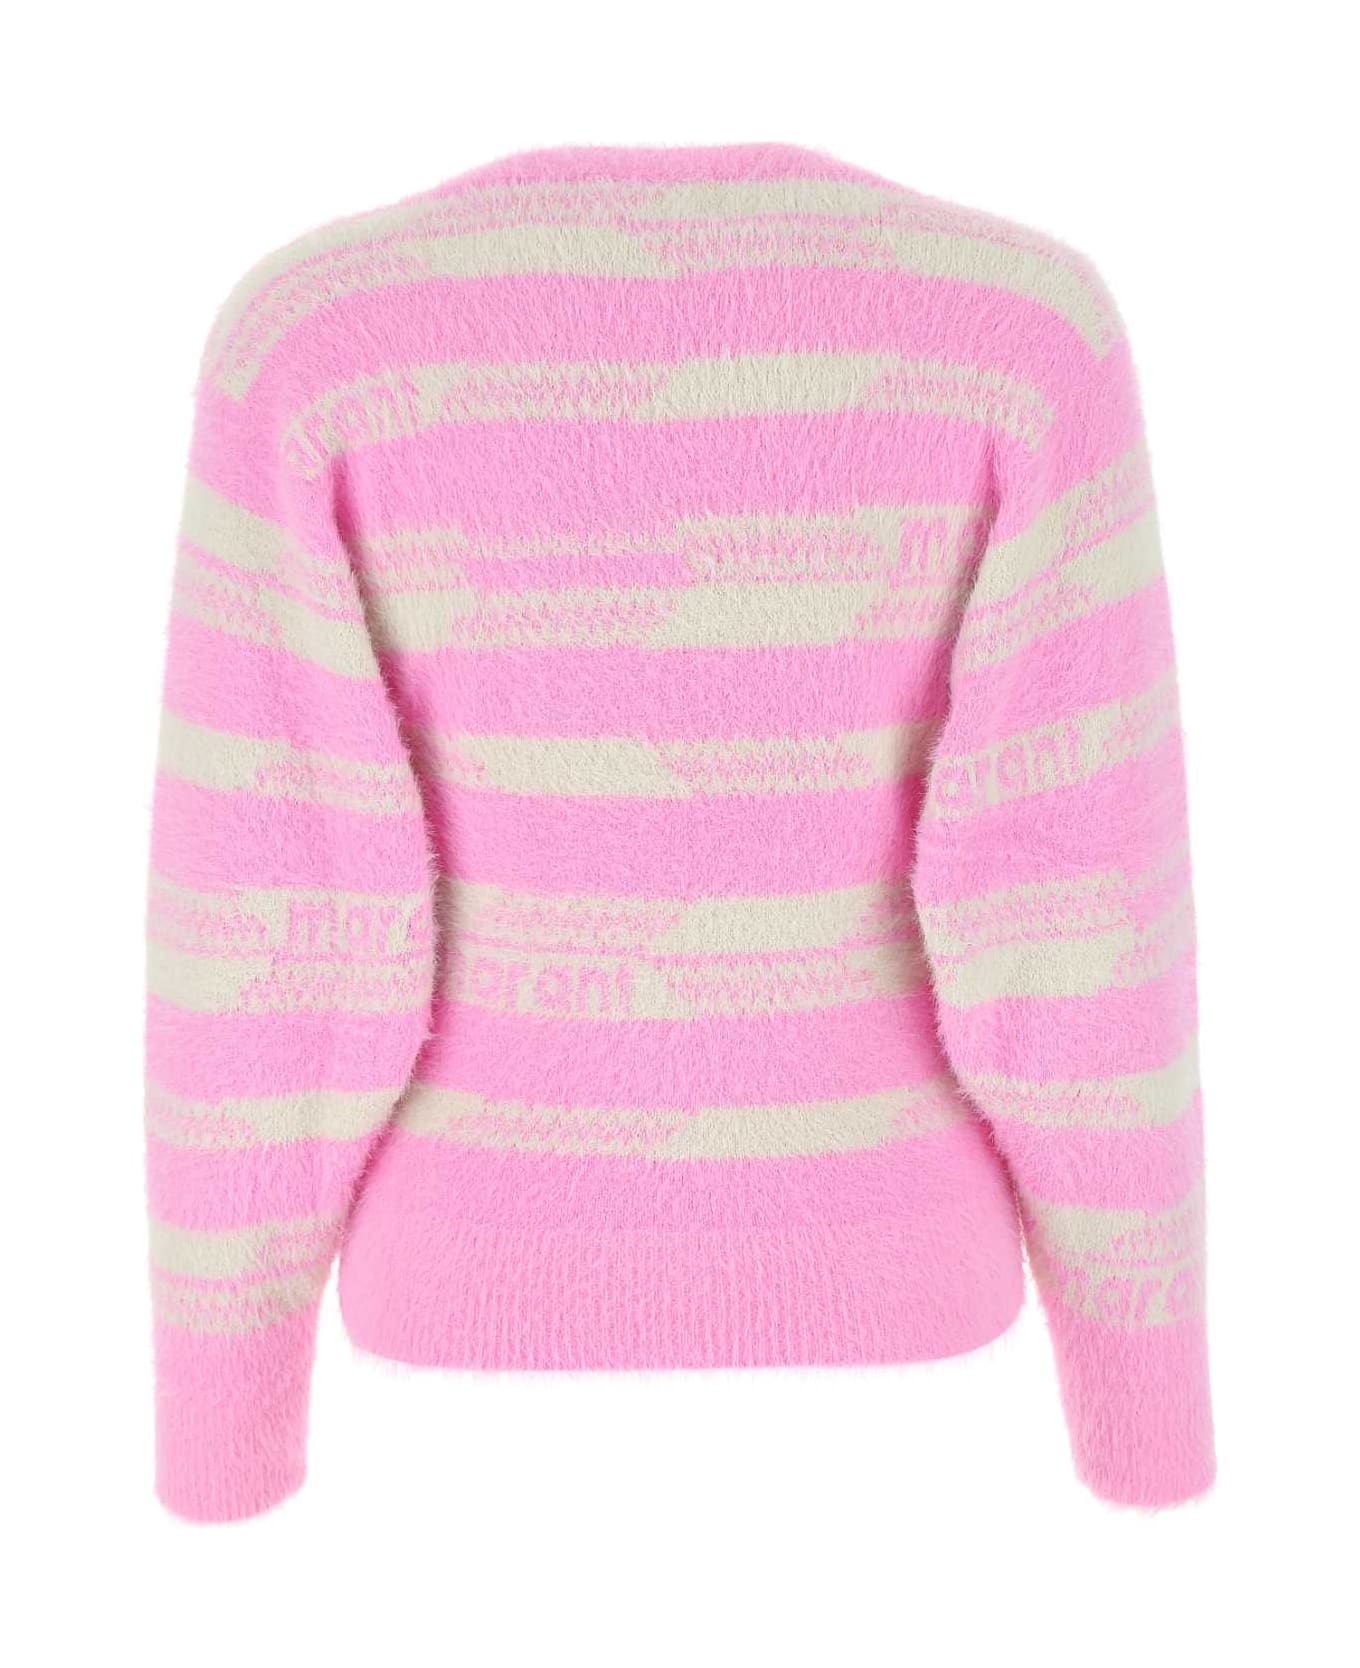 Marant Étoile Embroidered Nylon Orson Sweater - Pink